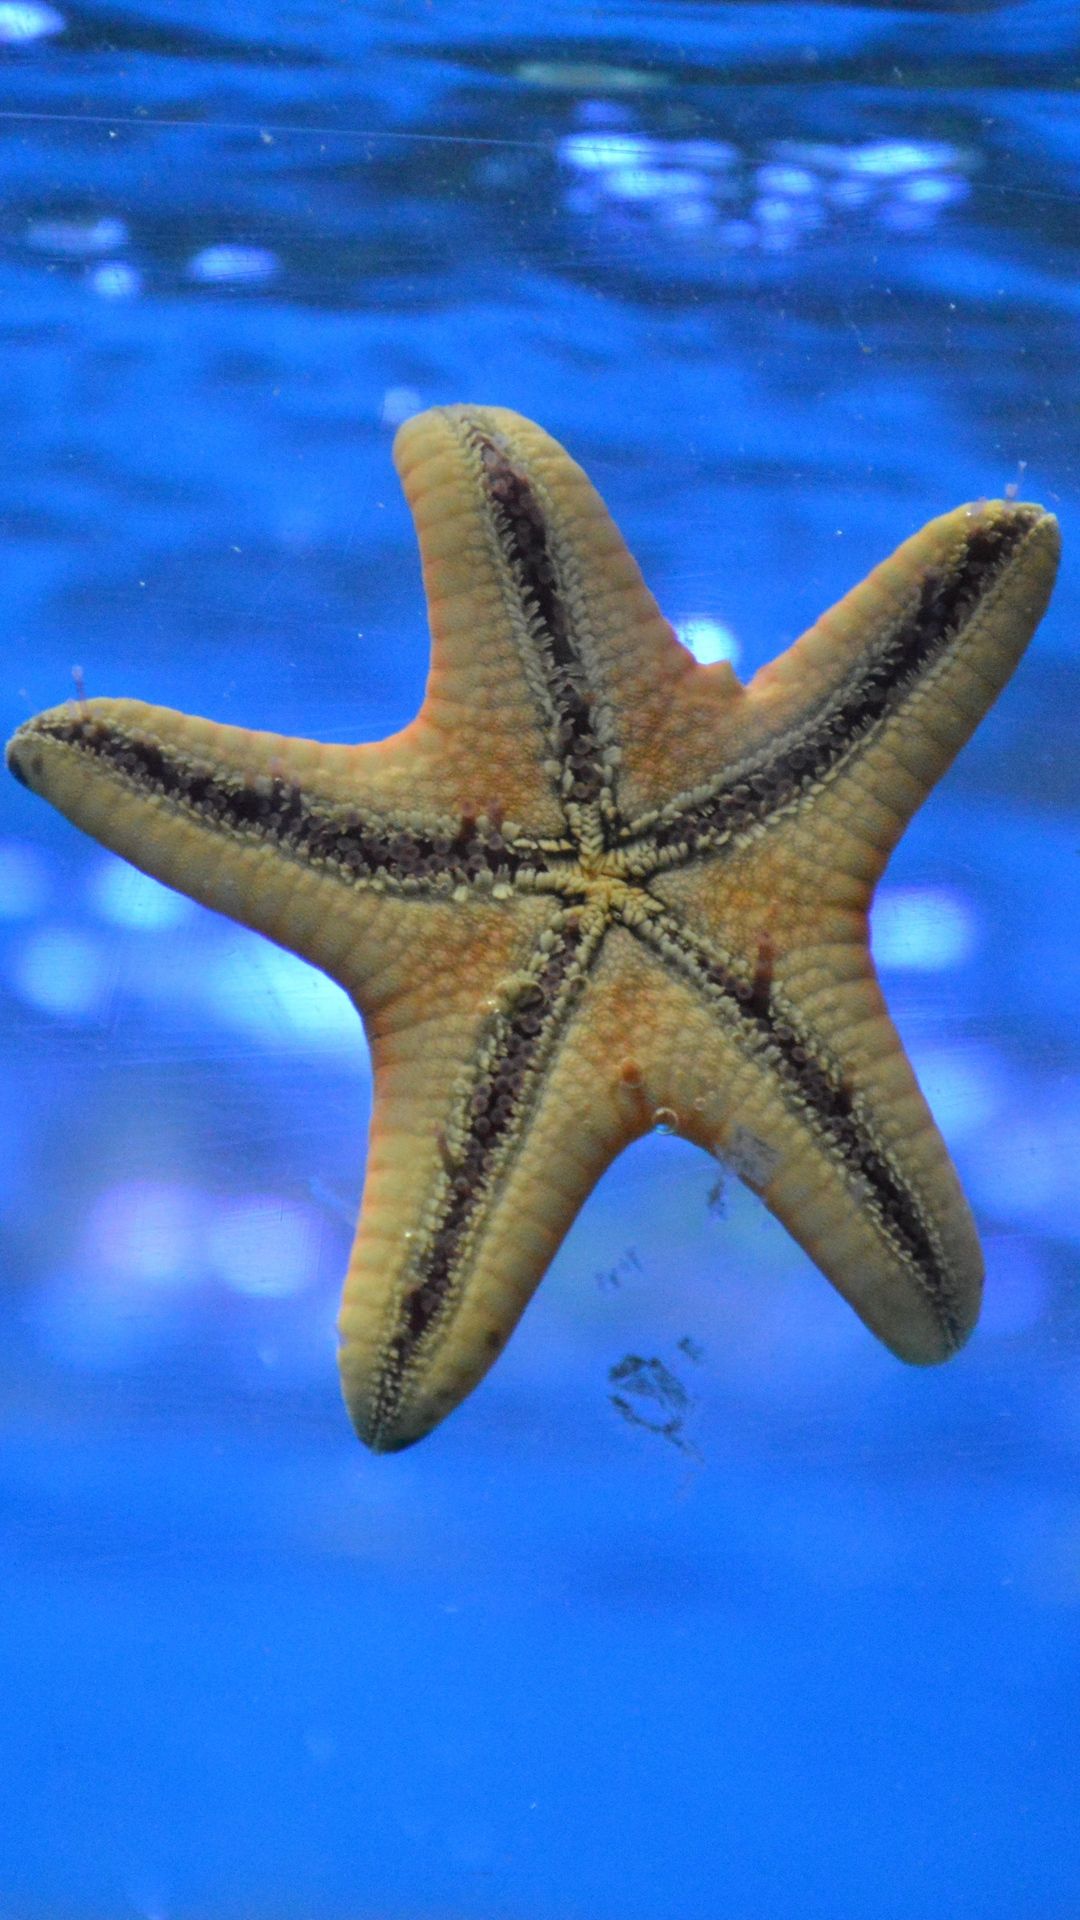 A starfish in the blue sea - Starfish